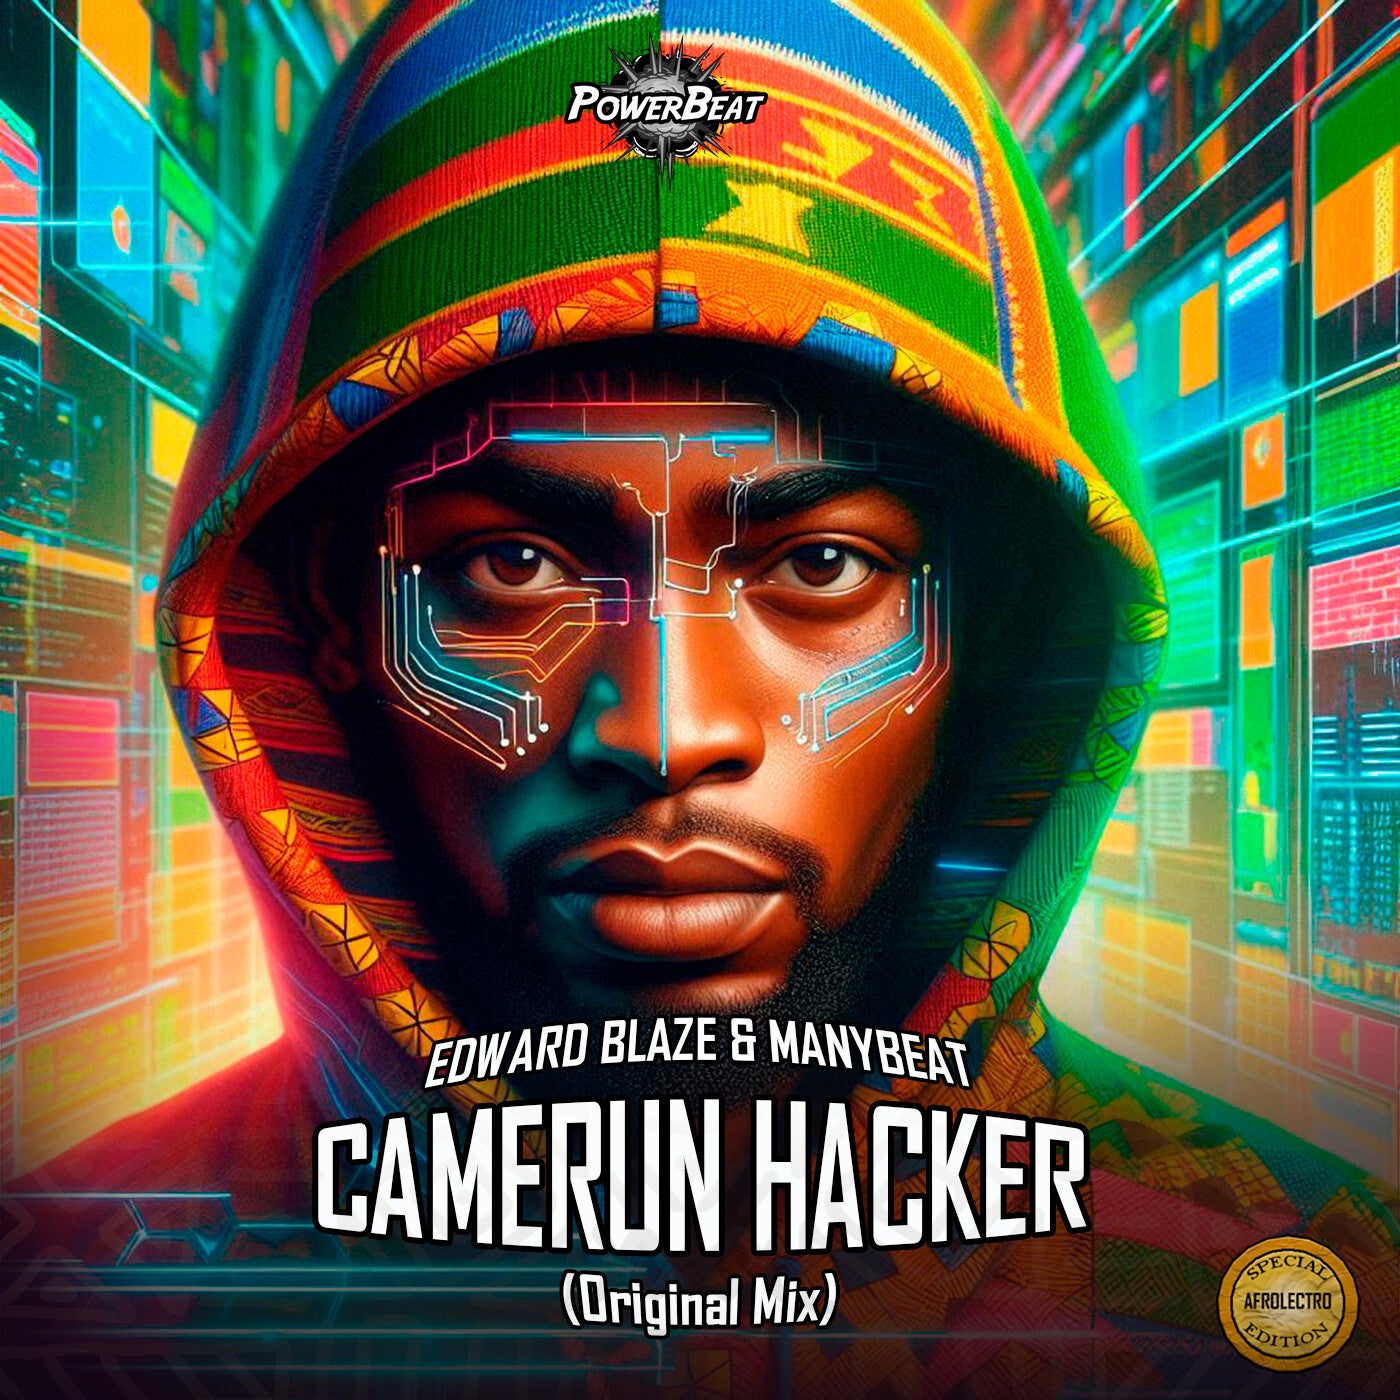 image cover: Manybeat, Edward Blaze - Camerun Hacker (Original Mix) on Powerbeat